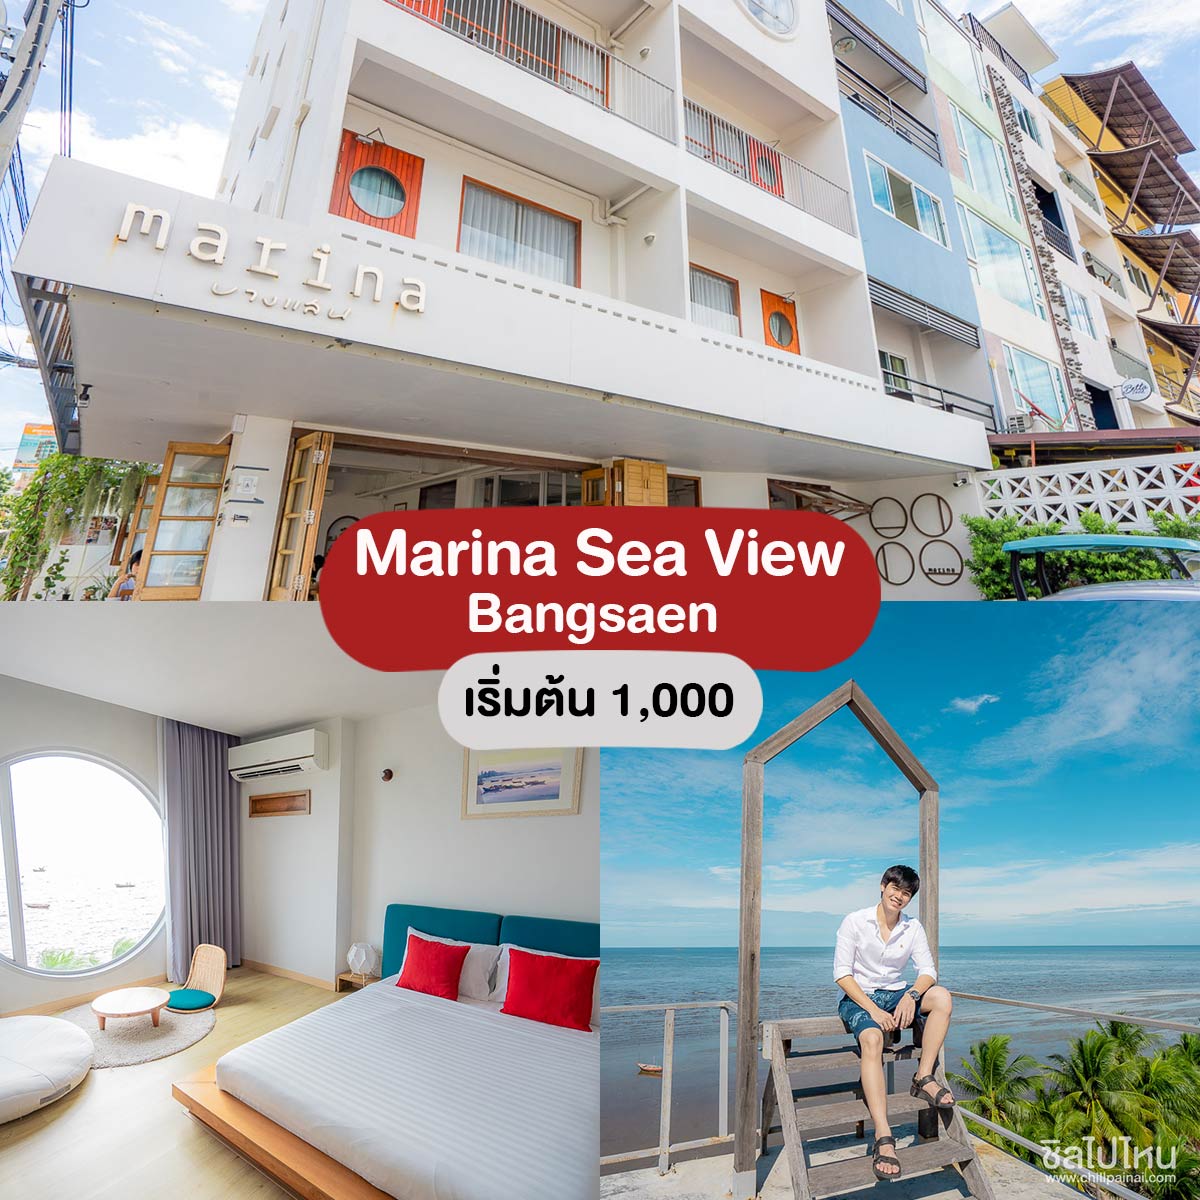 Marina Sea View Bangsaen - ที่พักบางแสน บางเสร่